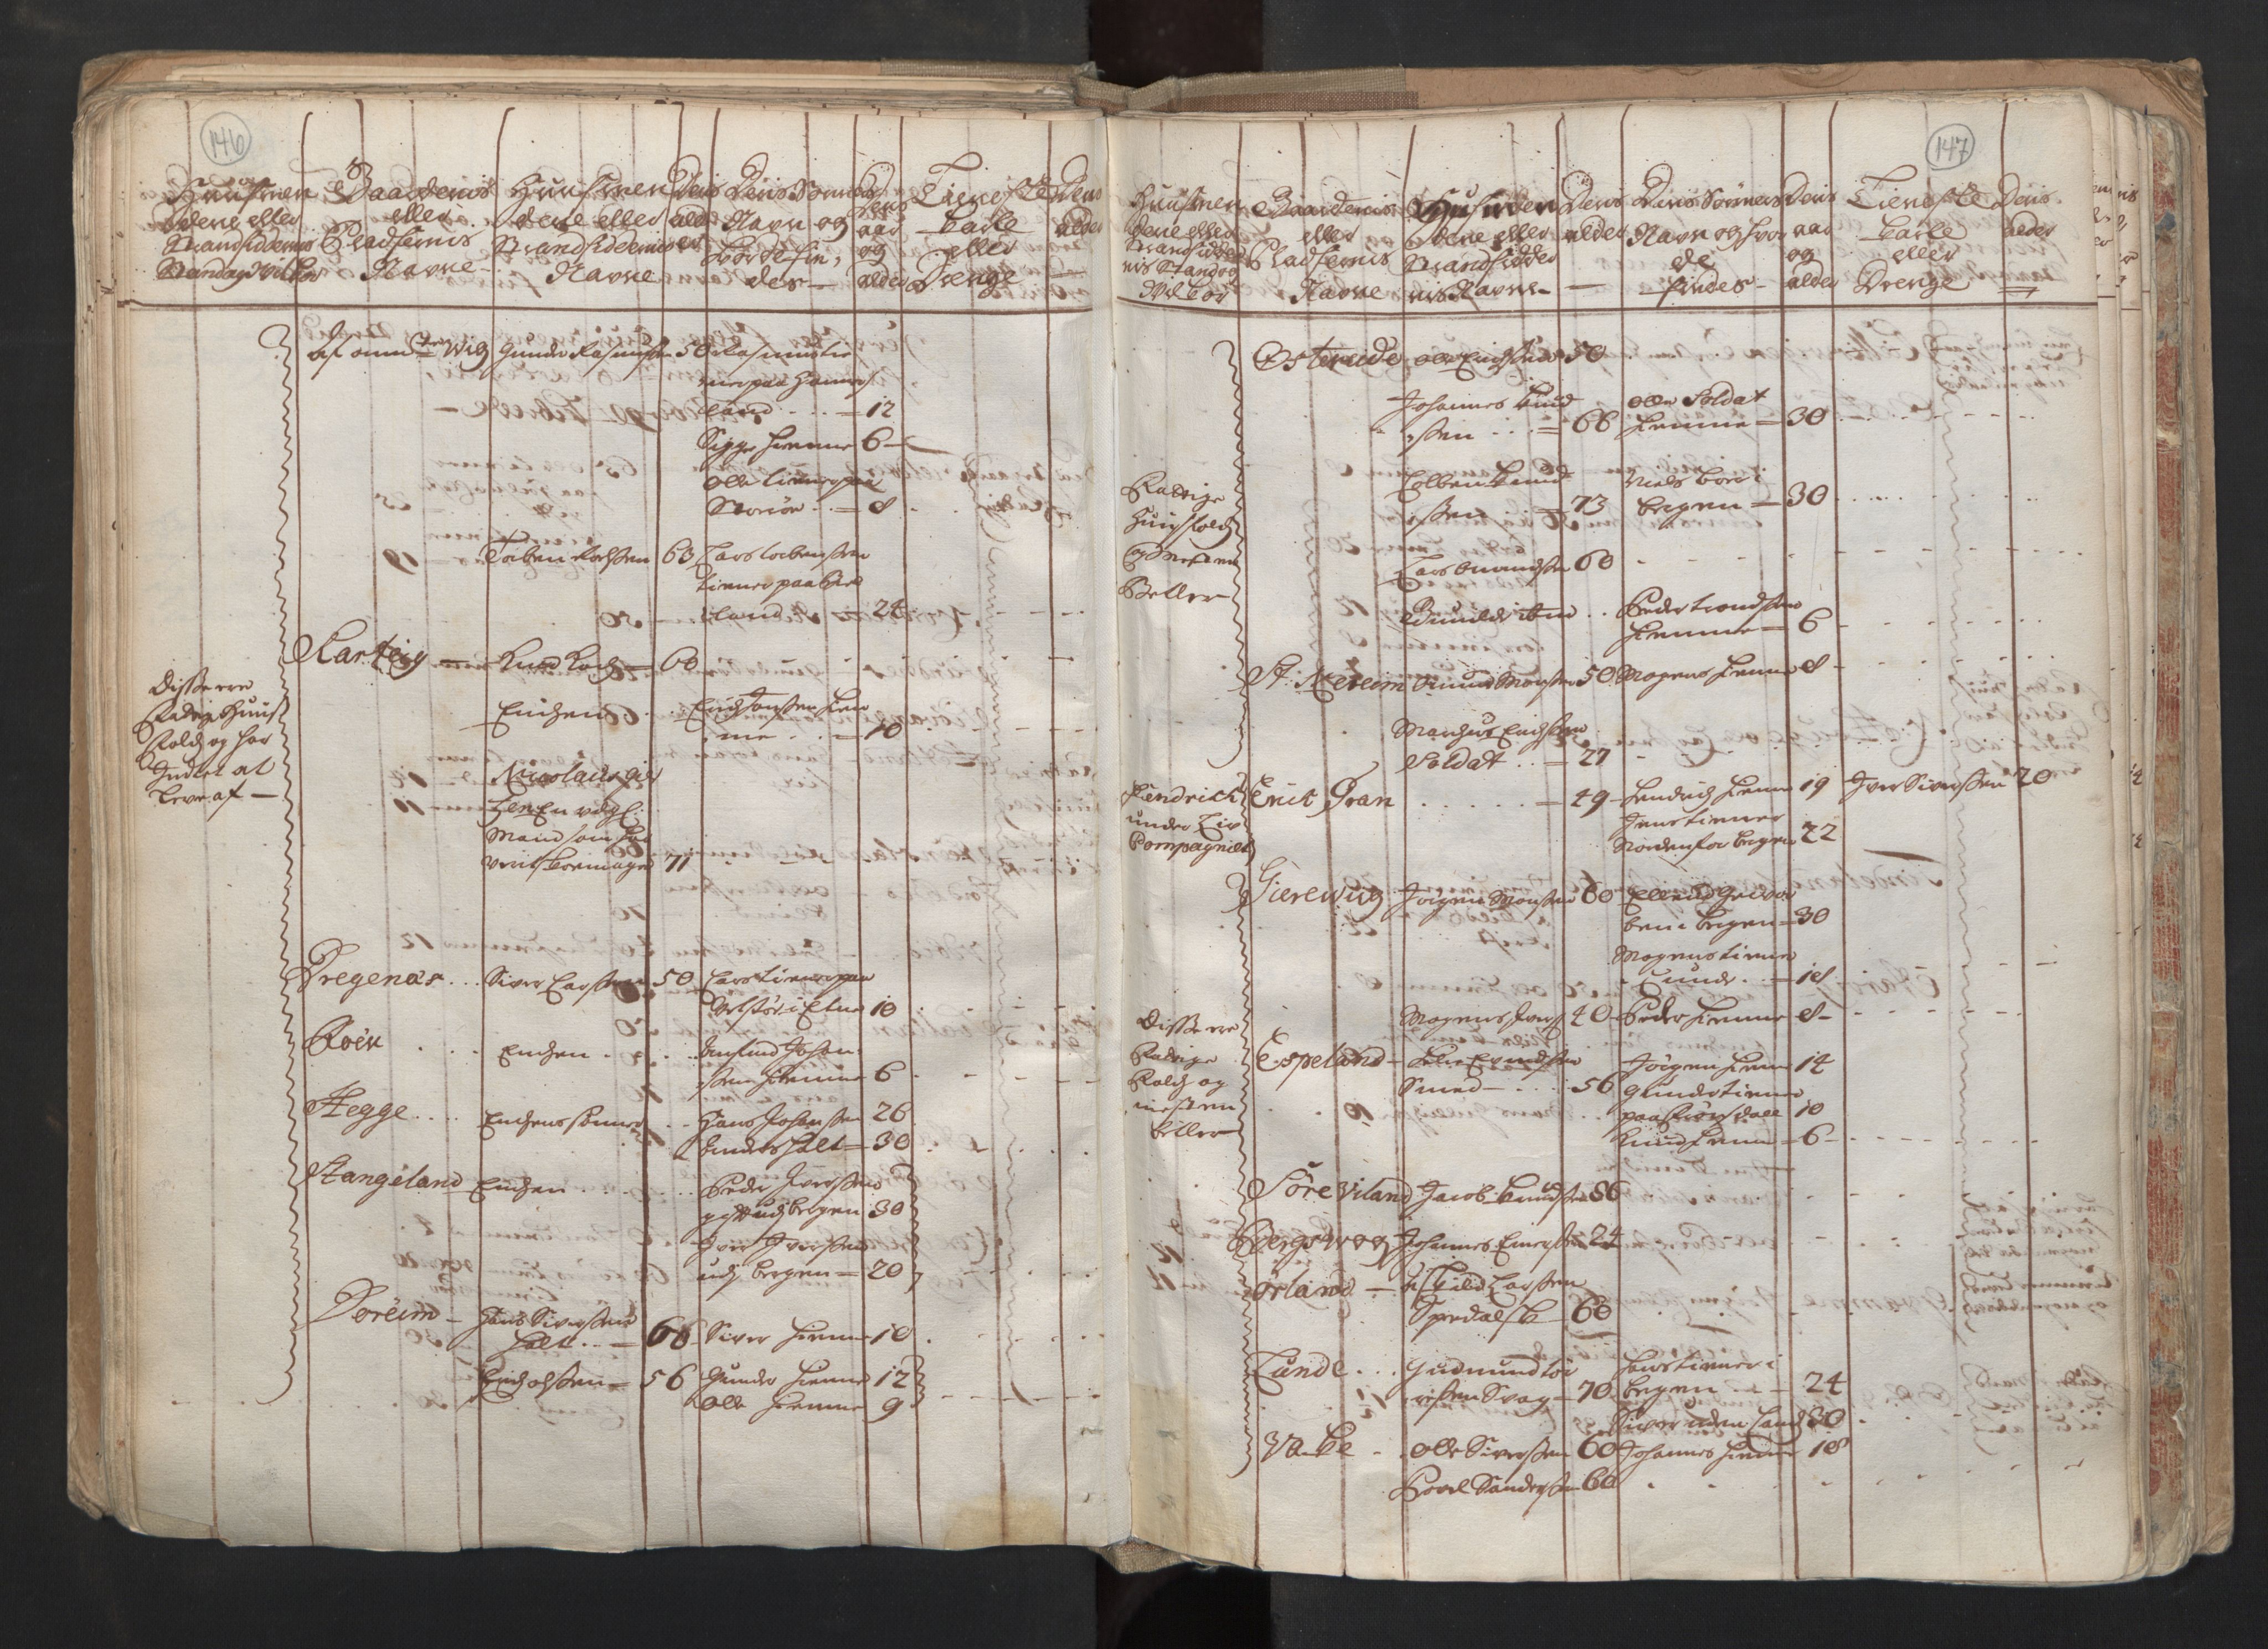 RA, Census (manntall) 1701, no. 6: Sunnhordland fogderi and Hardanger fogderi, 1701, p. 146-147